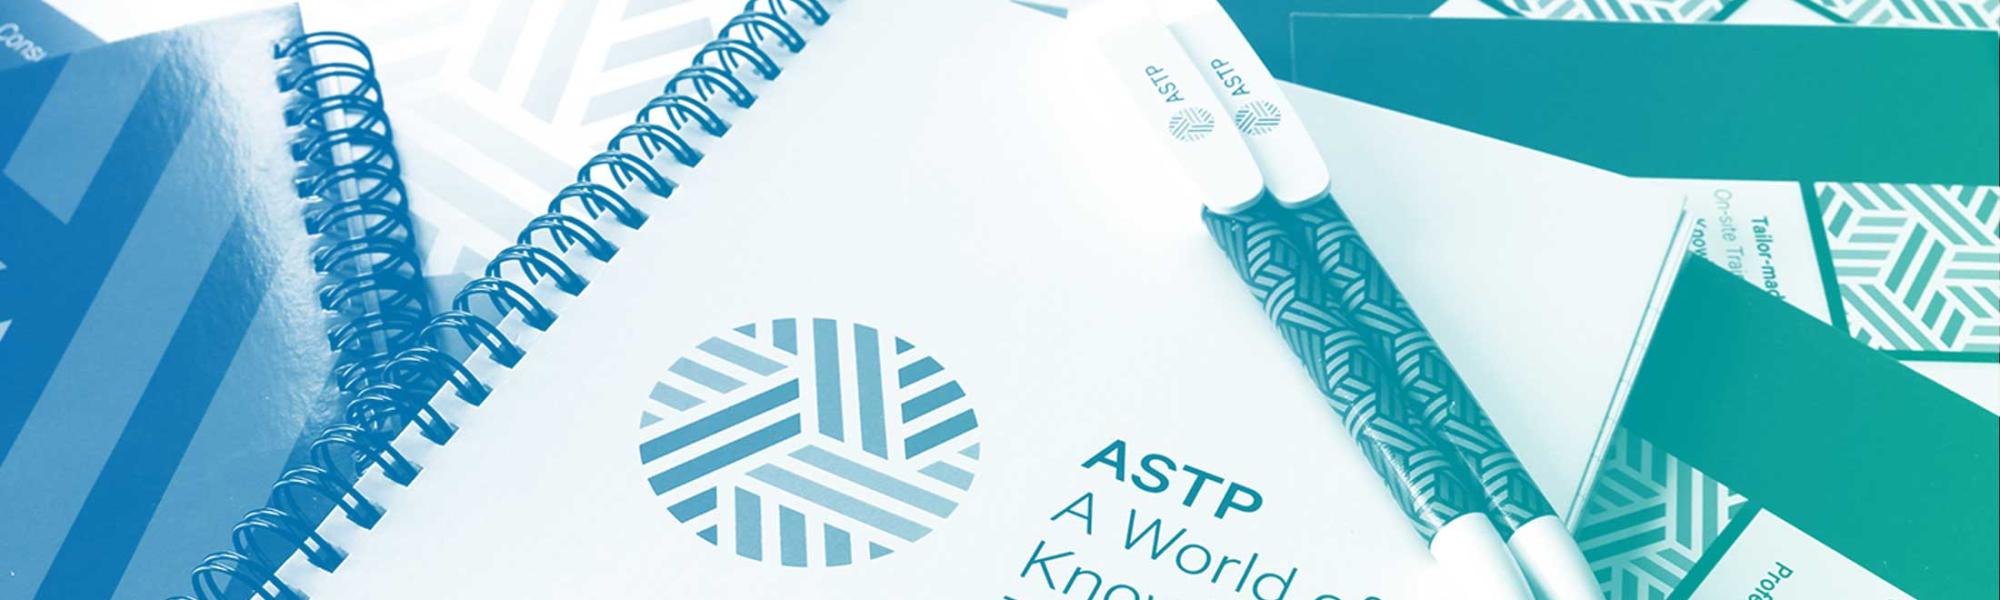 ASTP - Our Team